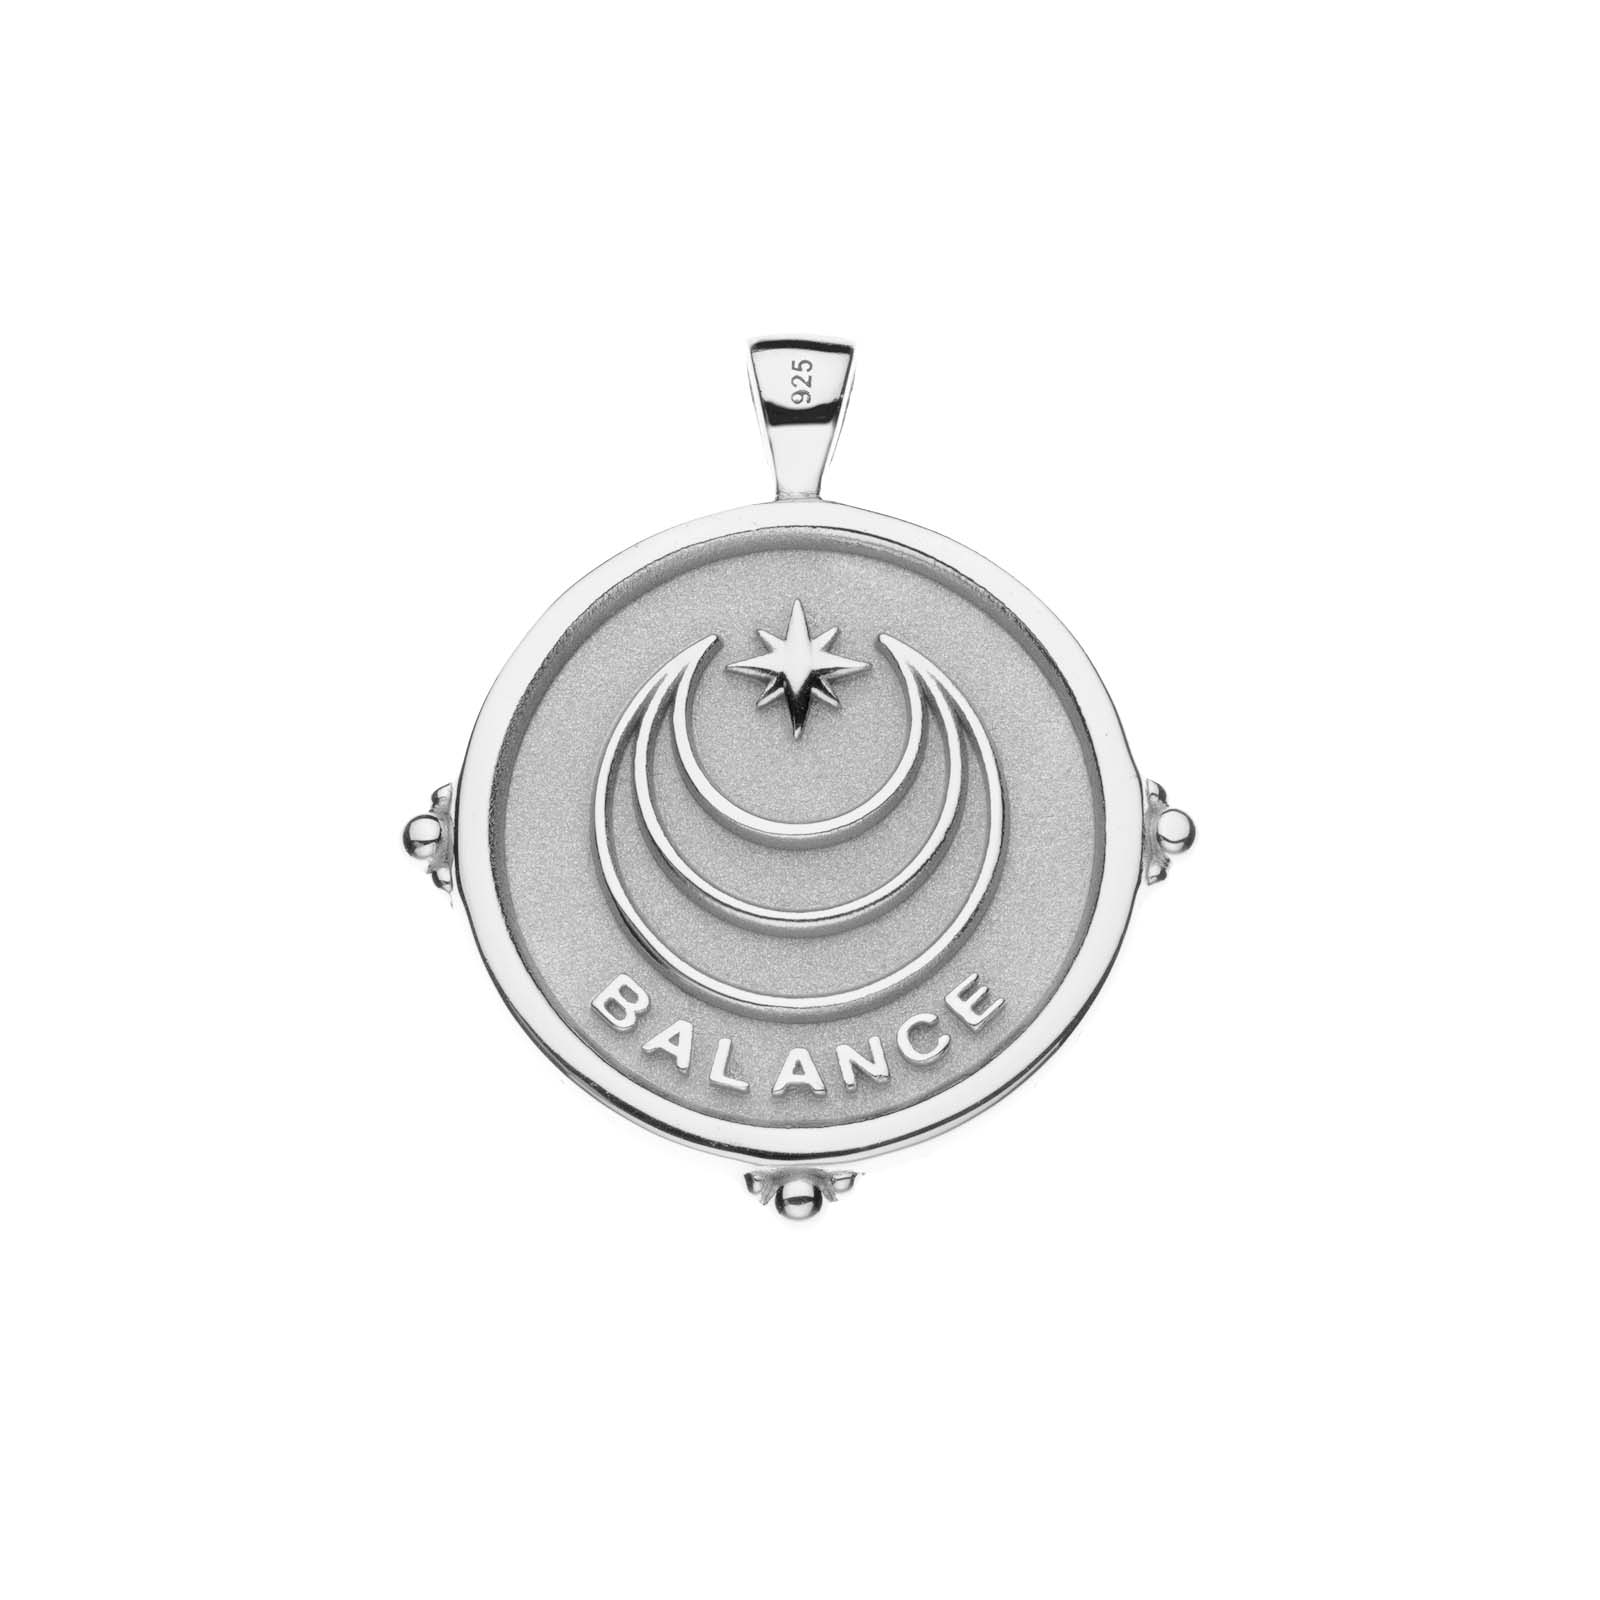 BALANCE JW Original Pendant Coin in Silver